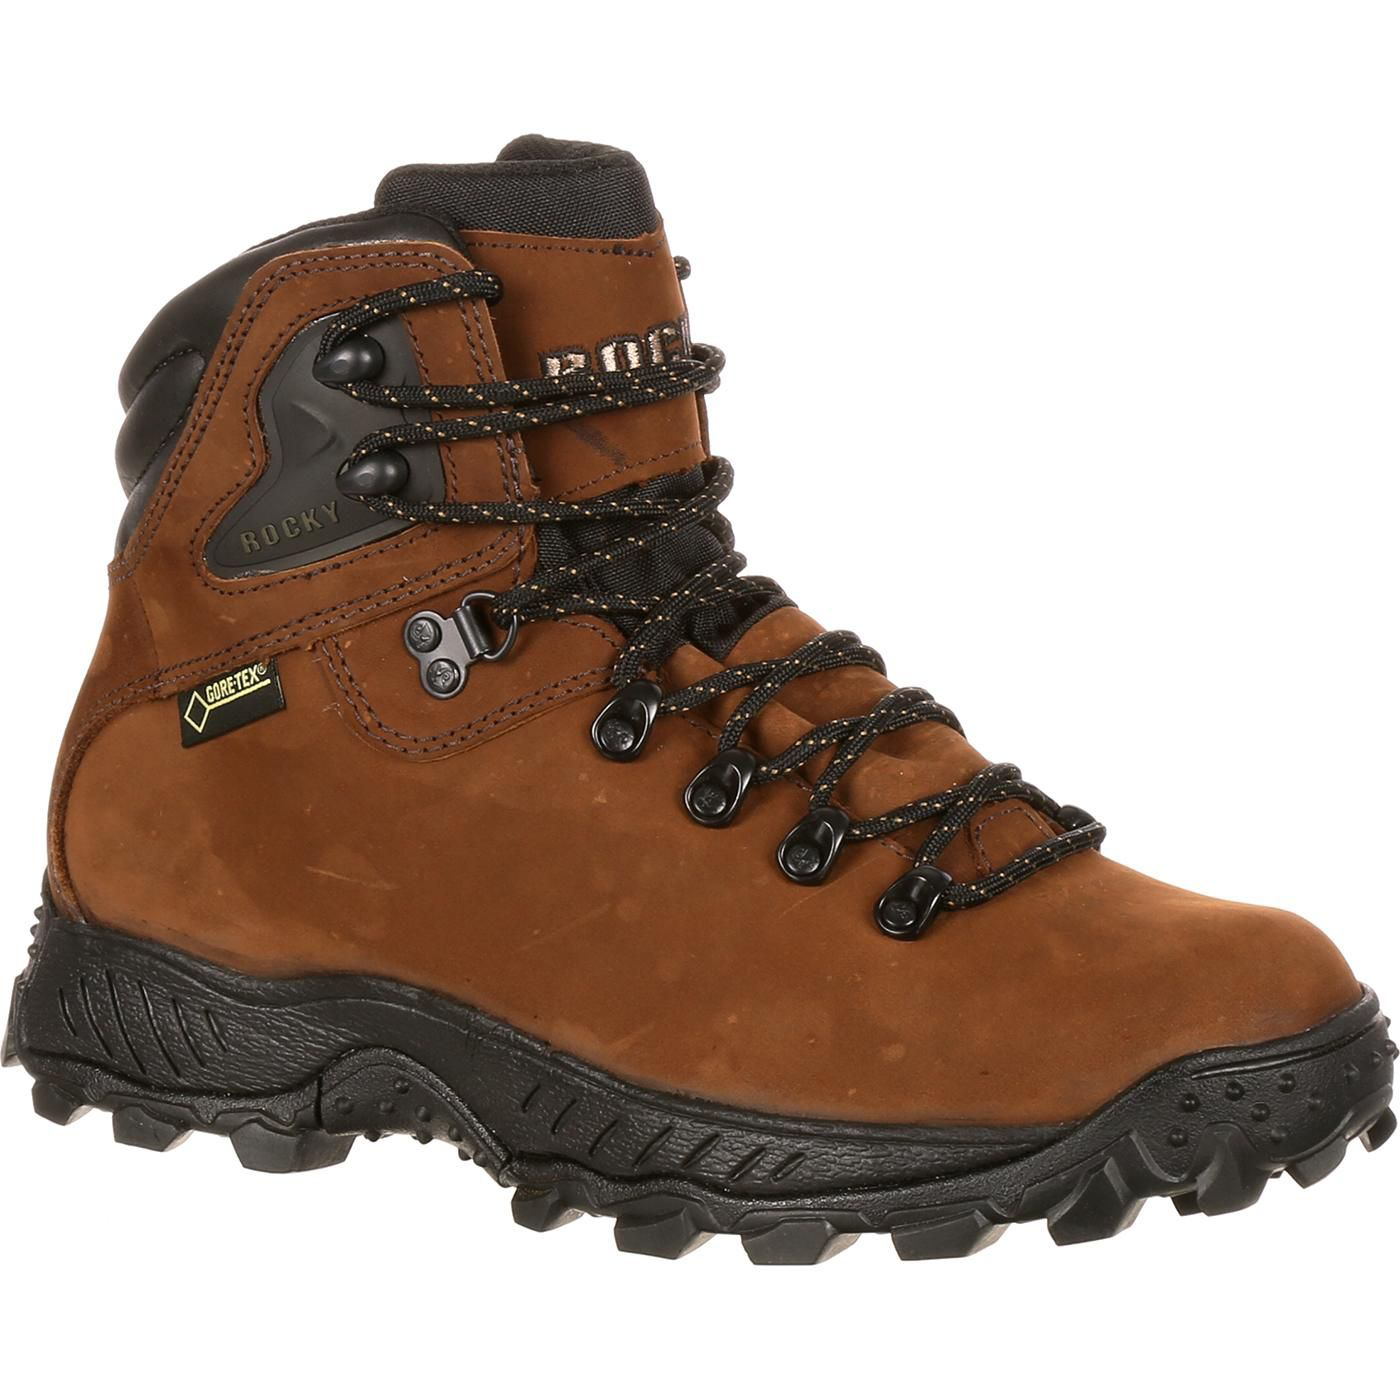 Rocky Ridgetop GORE-TEX 6"" Hiking Boots for Men - Brown - 14W